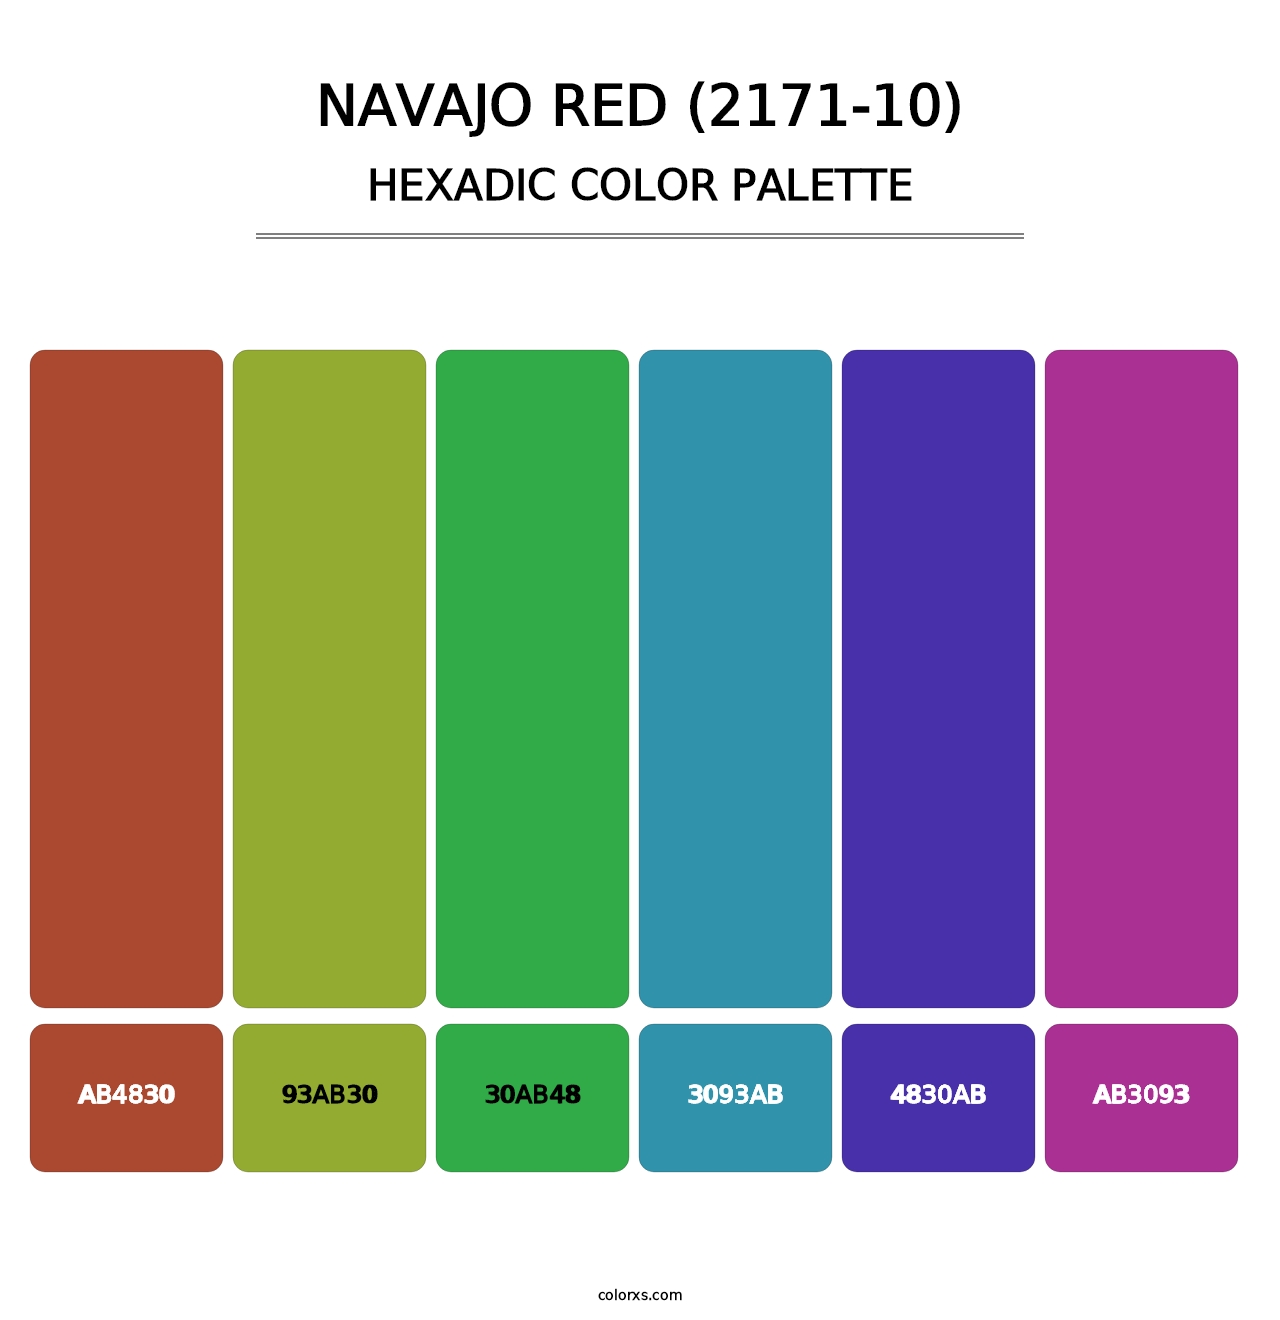 Navajo Red (2171-10) - Hexadic Color Palette